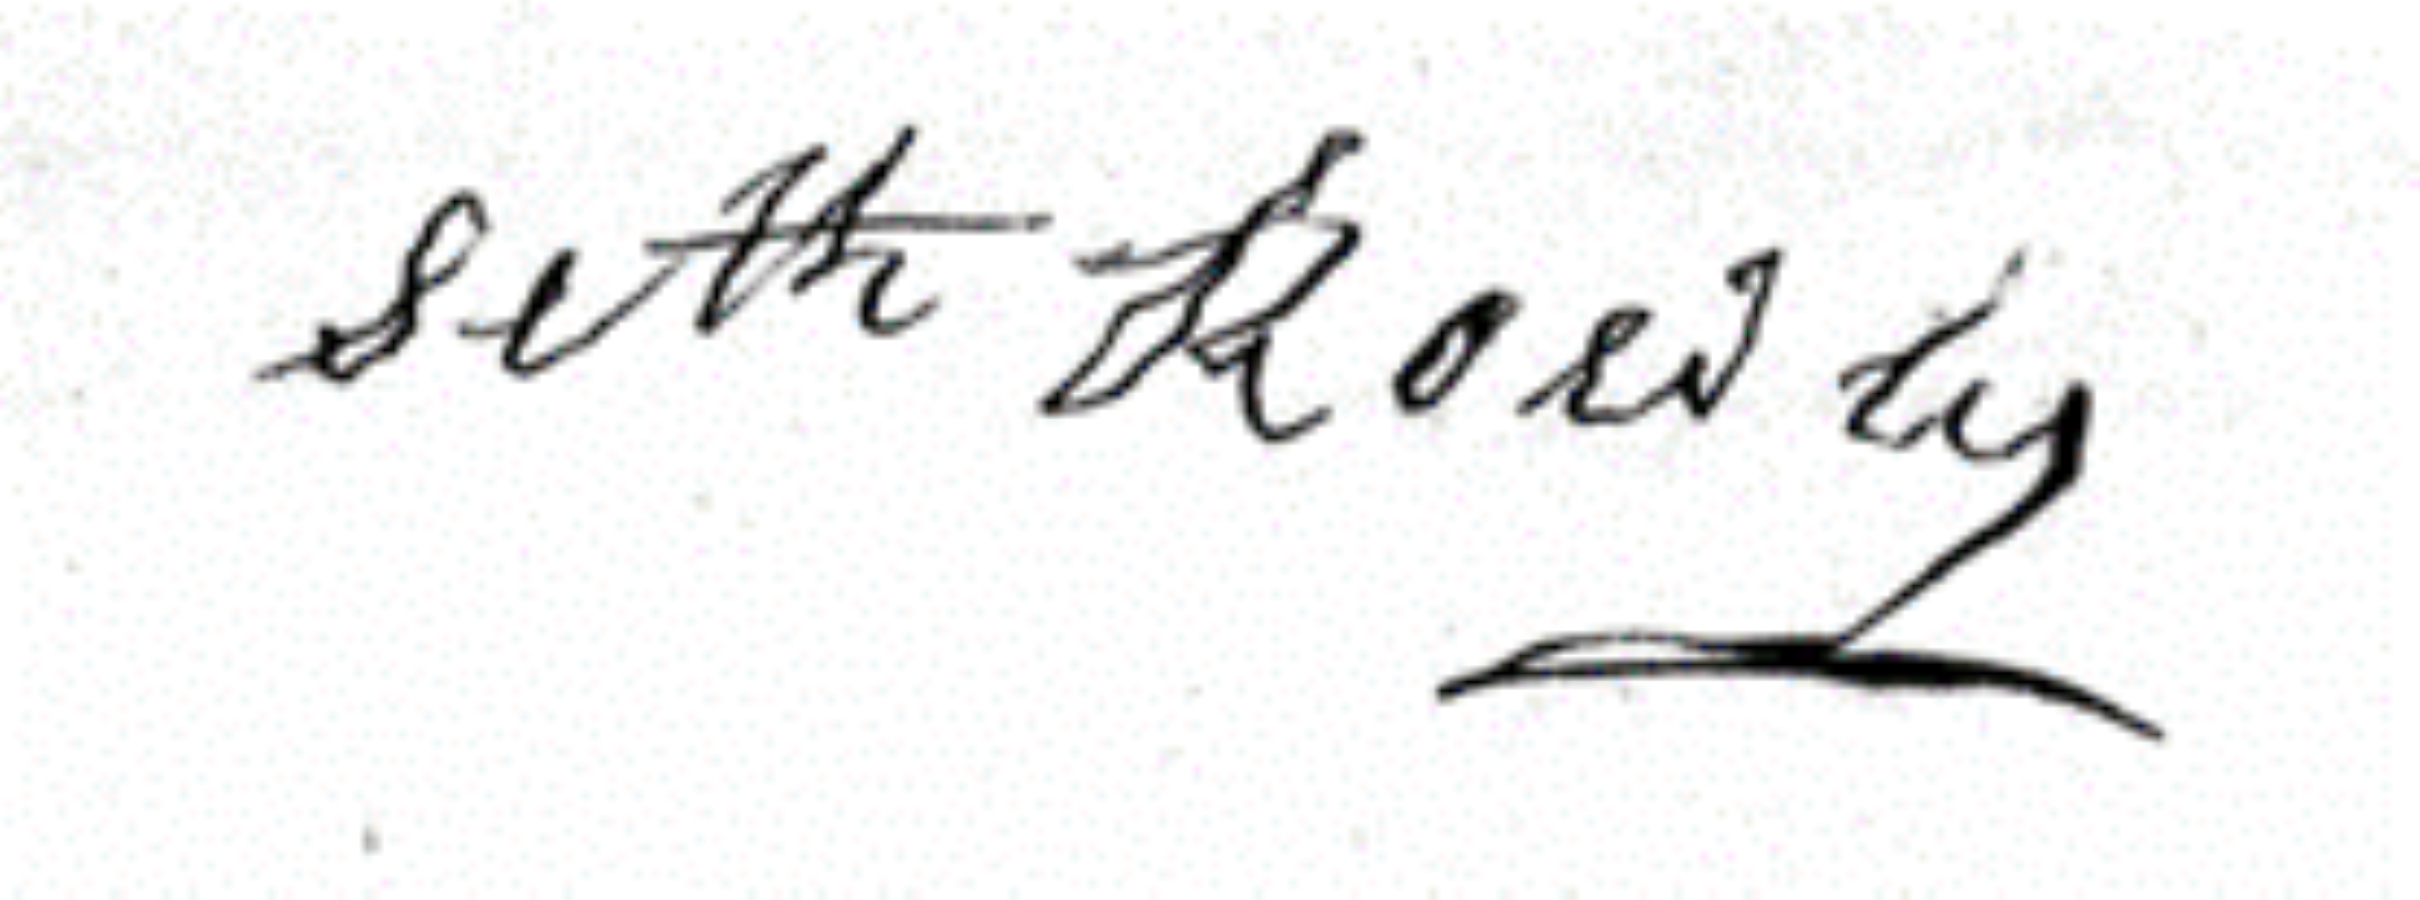 In shaky cursive handwriting: Seth Rowley